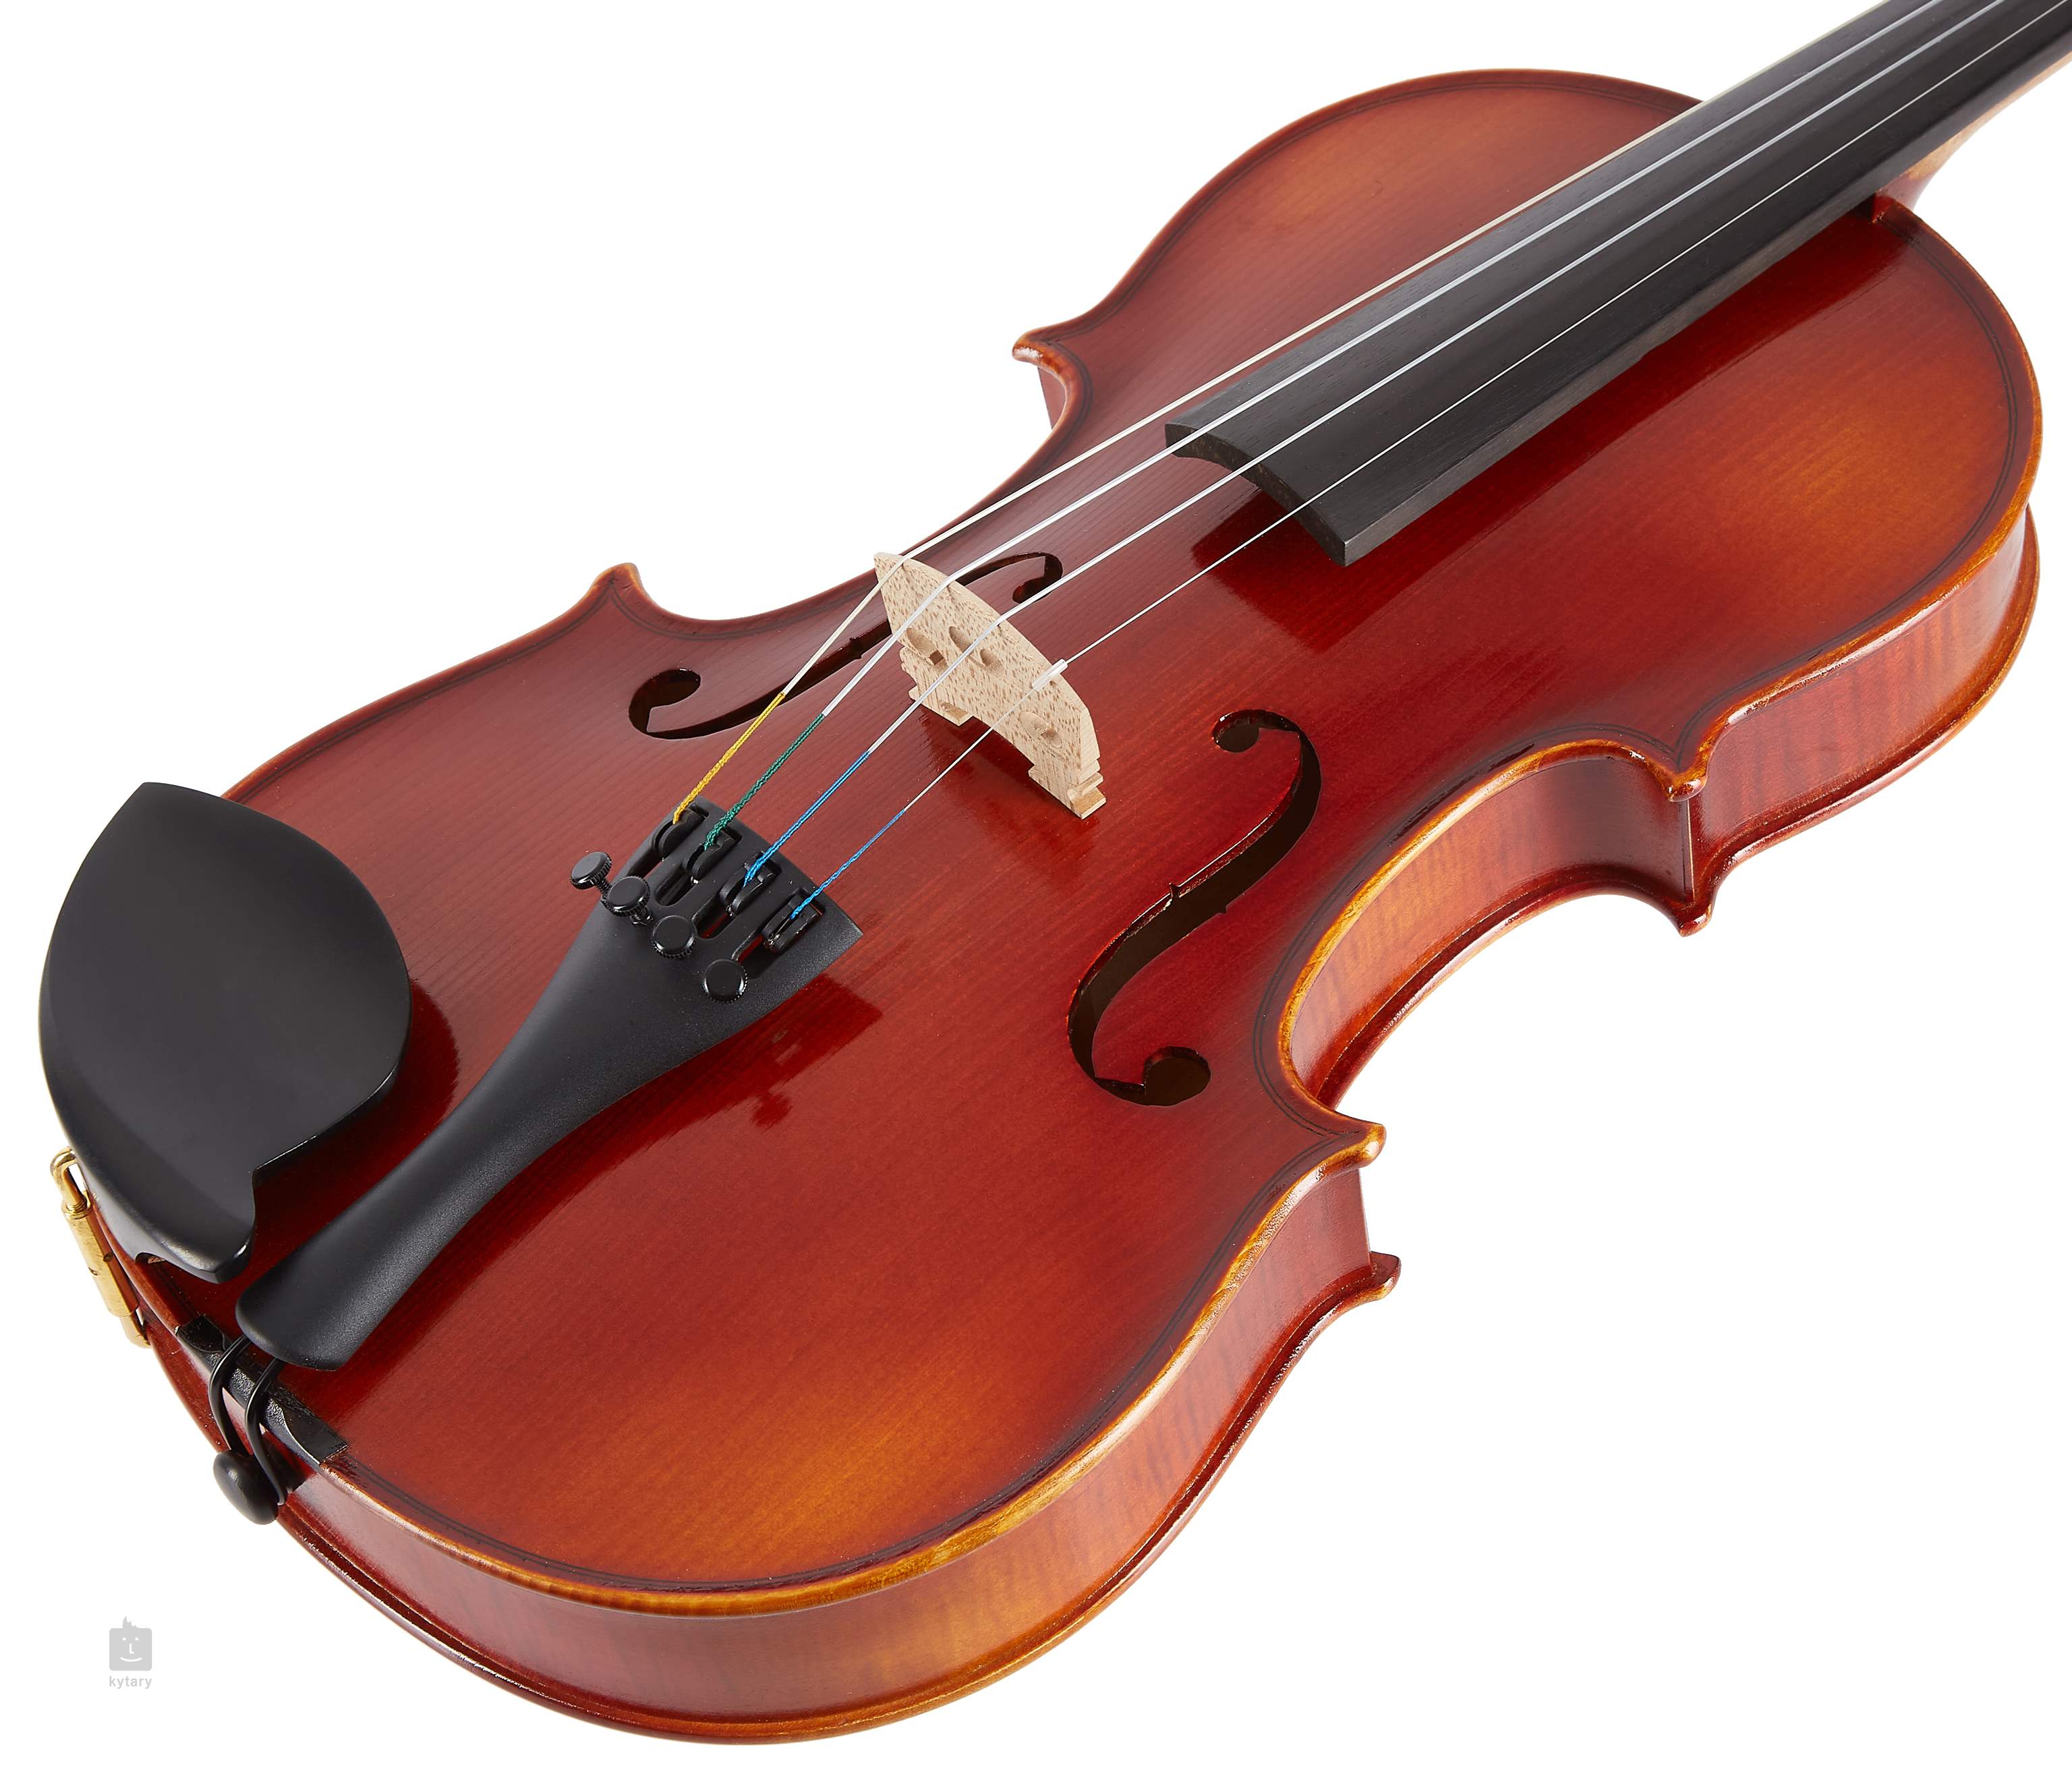 Gewa Modell IIA épaulière coussin violon 4/4 - grand - Boullard Musique